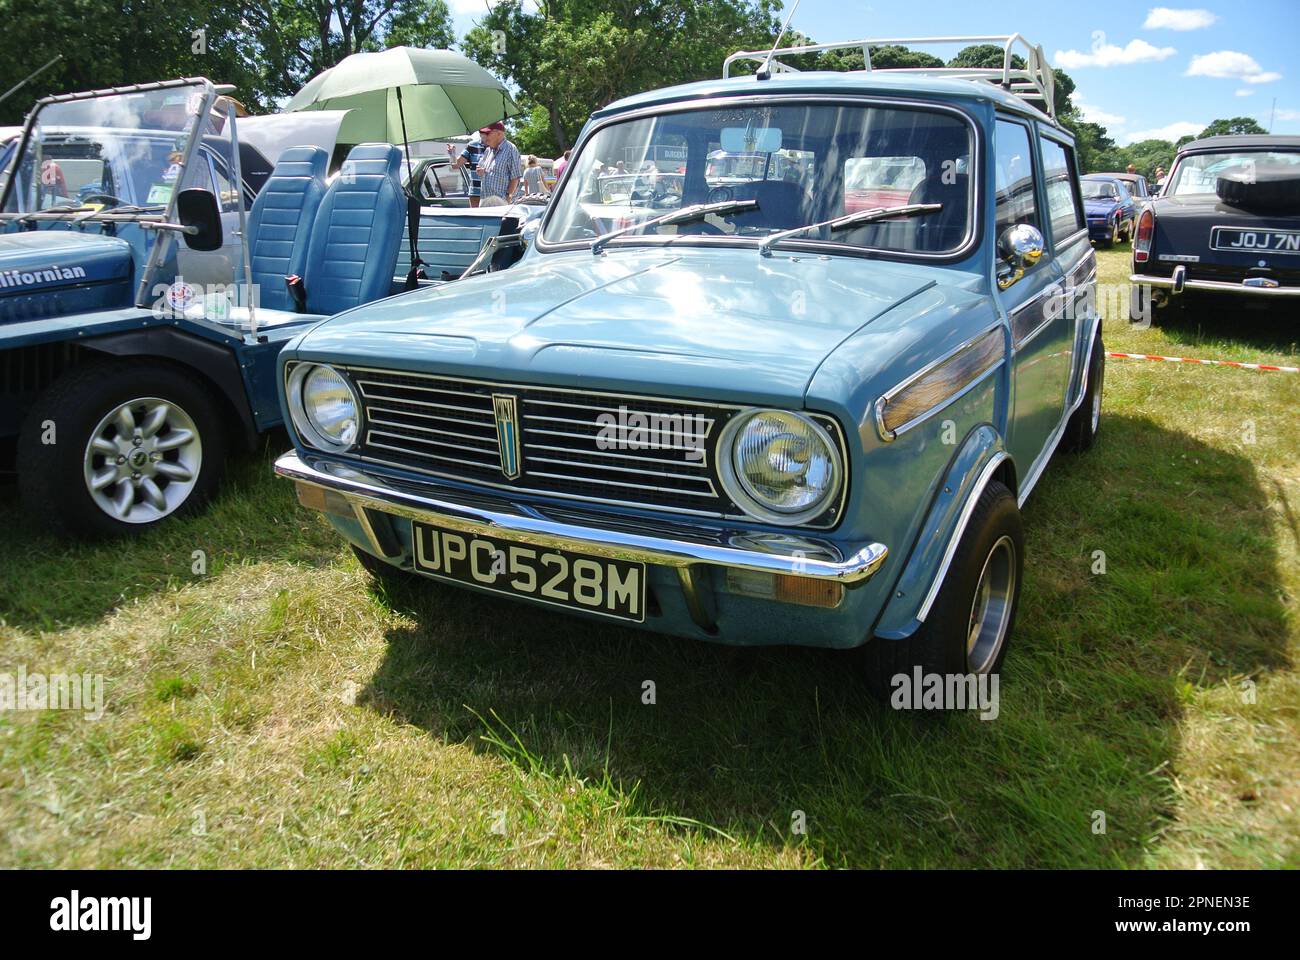 A 1973 Austin Mini parked on display at the 47th Historic Vehicle Gathering, Powderham, Devon, England, UK. Stock Photo